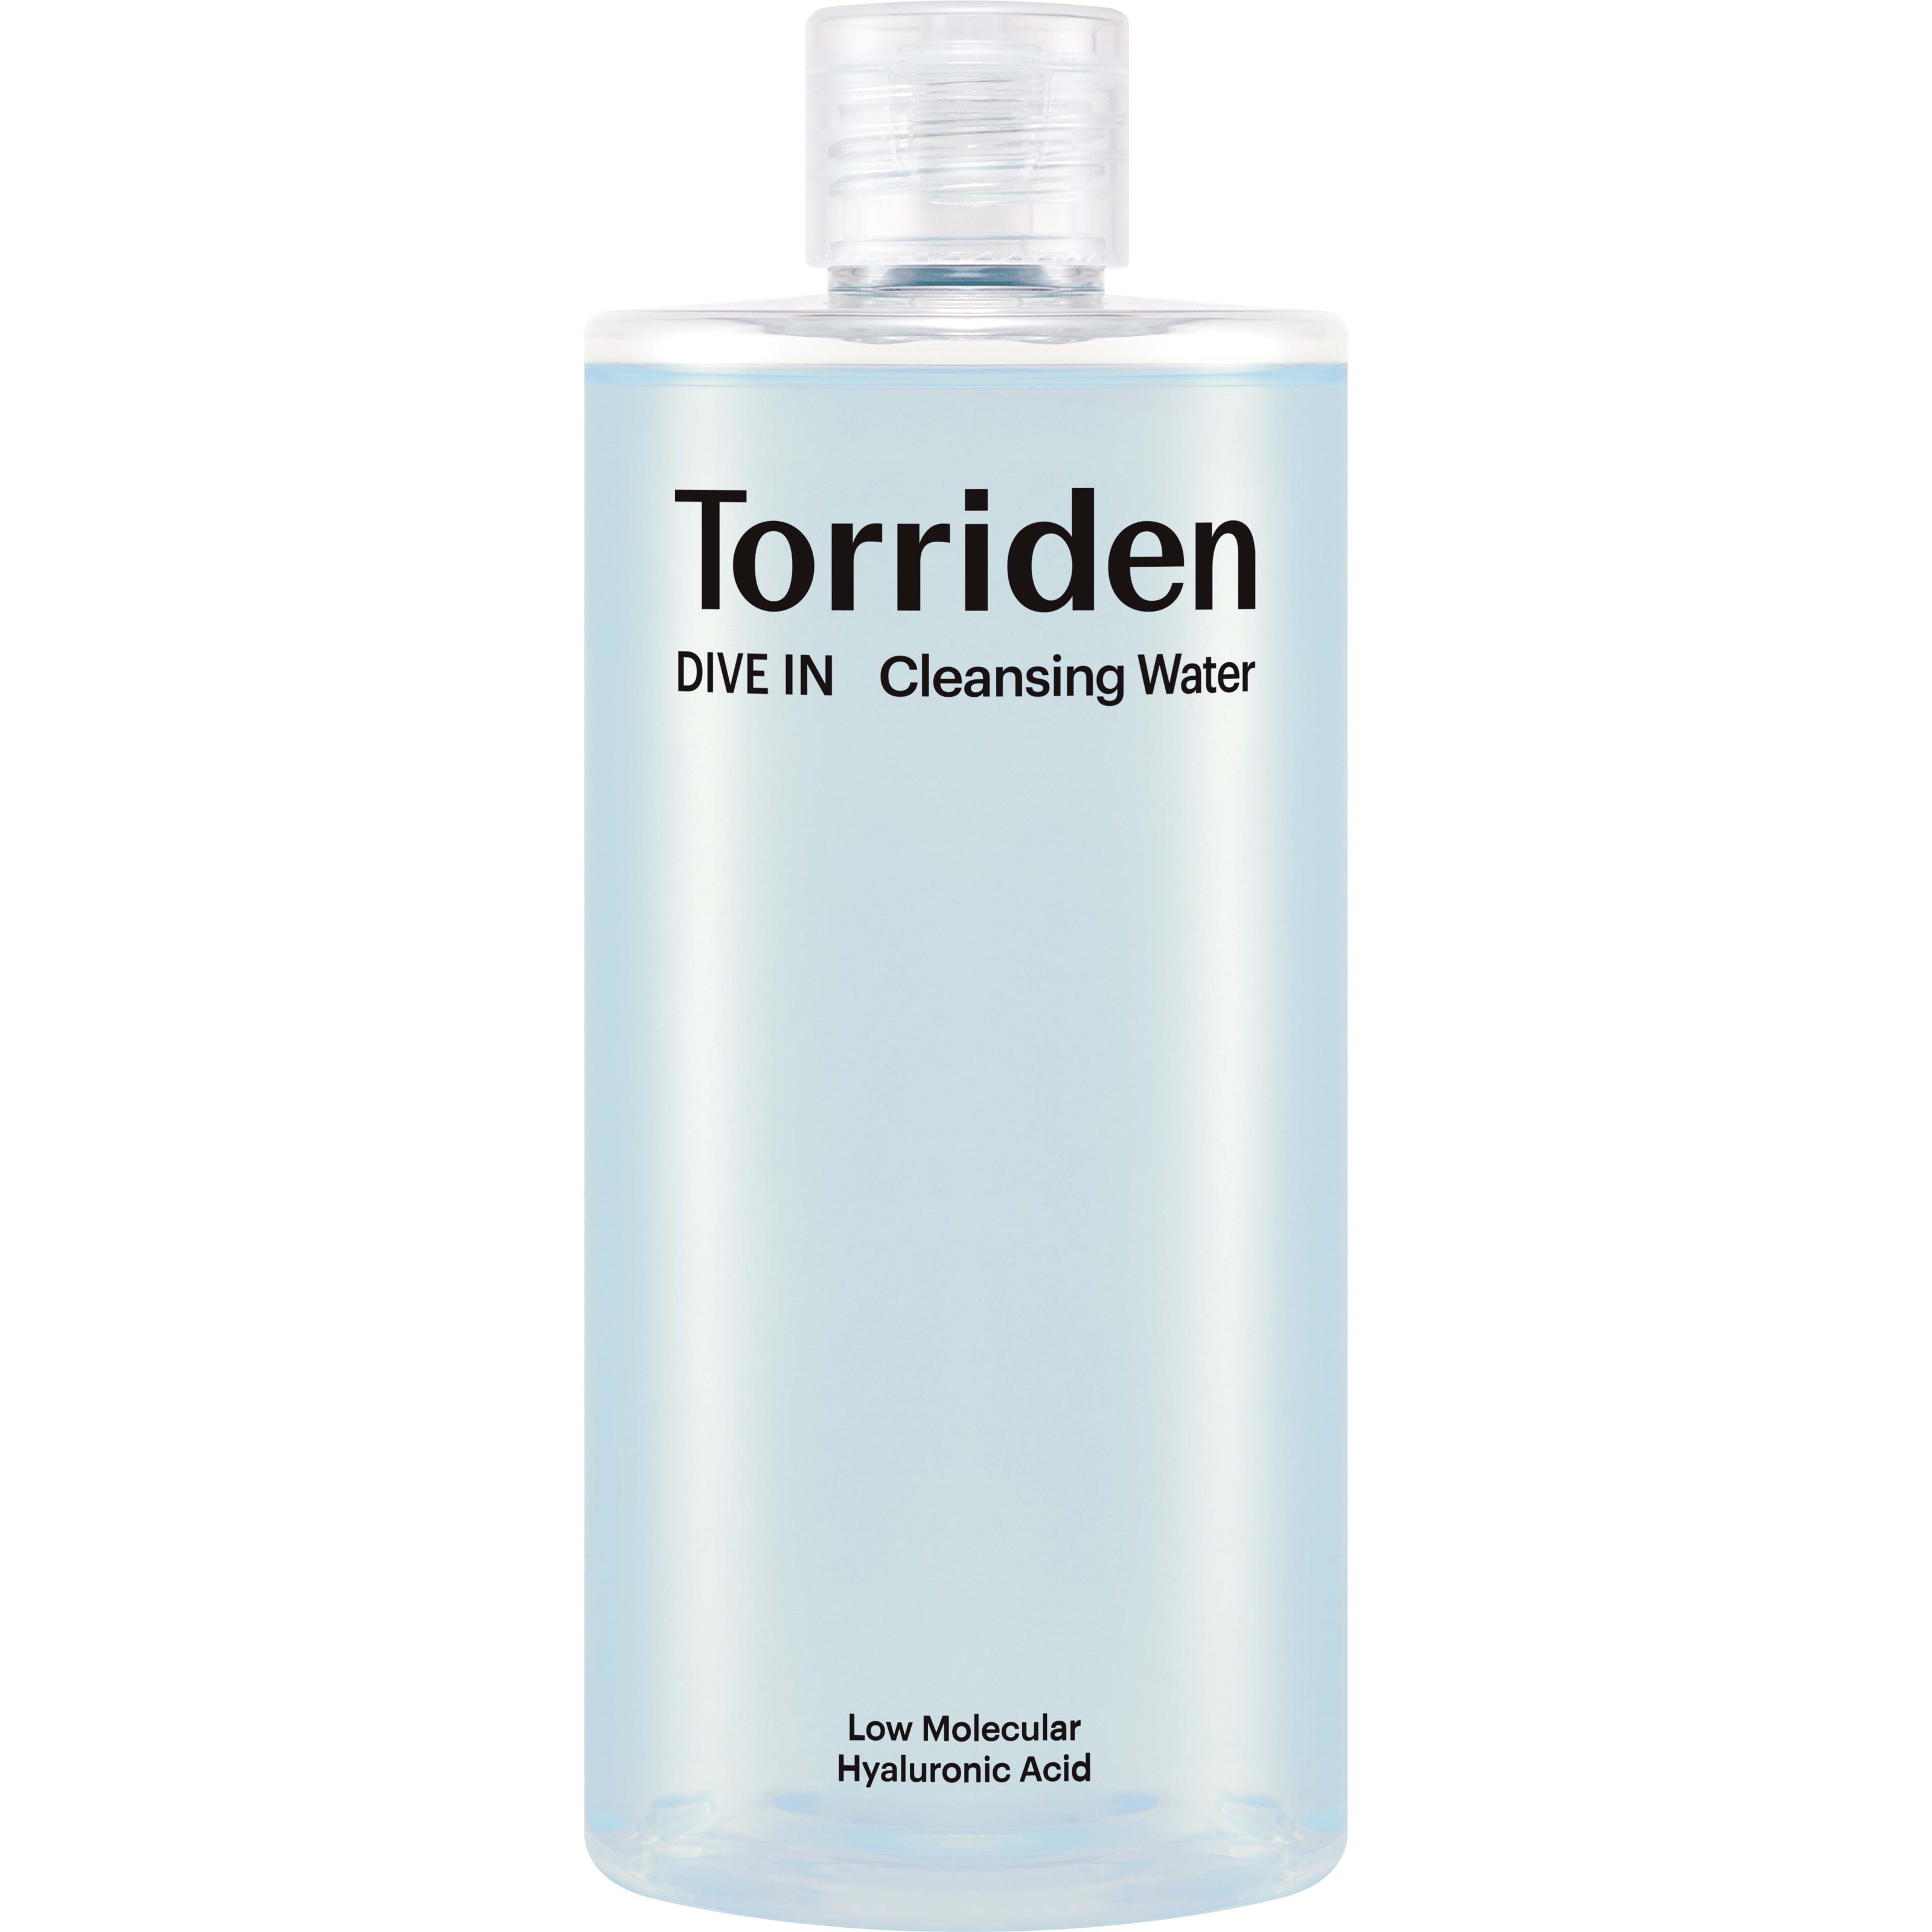 Torriden DIVE IN Low Molecular Hyaluronic Acid Cleansing Water 400 ml